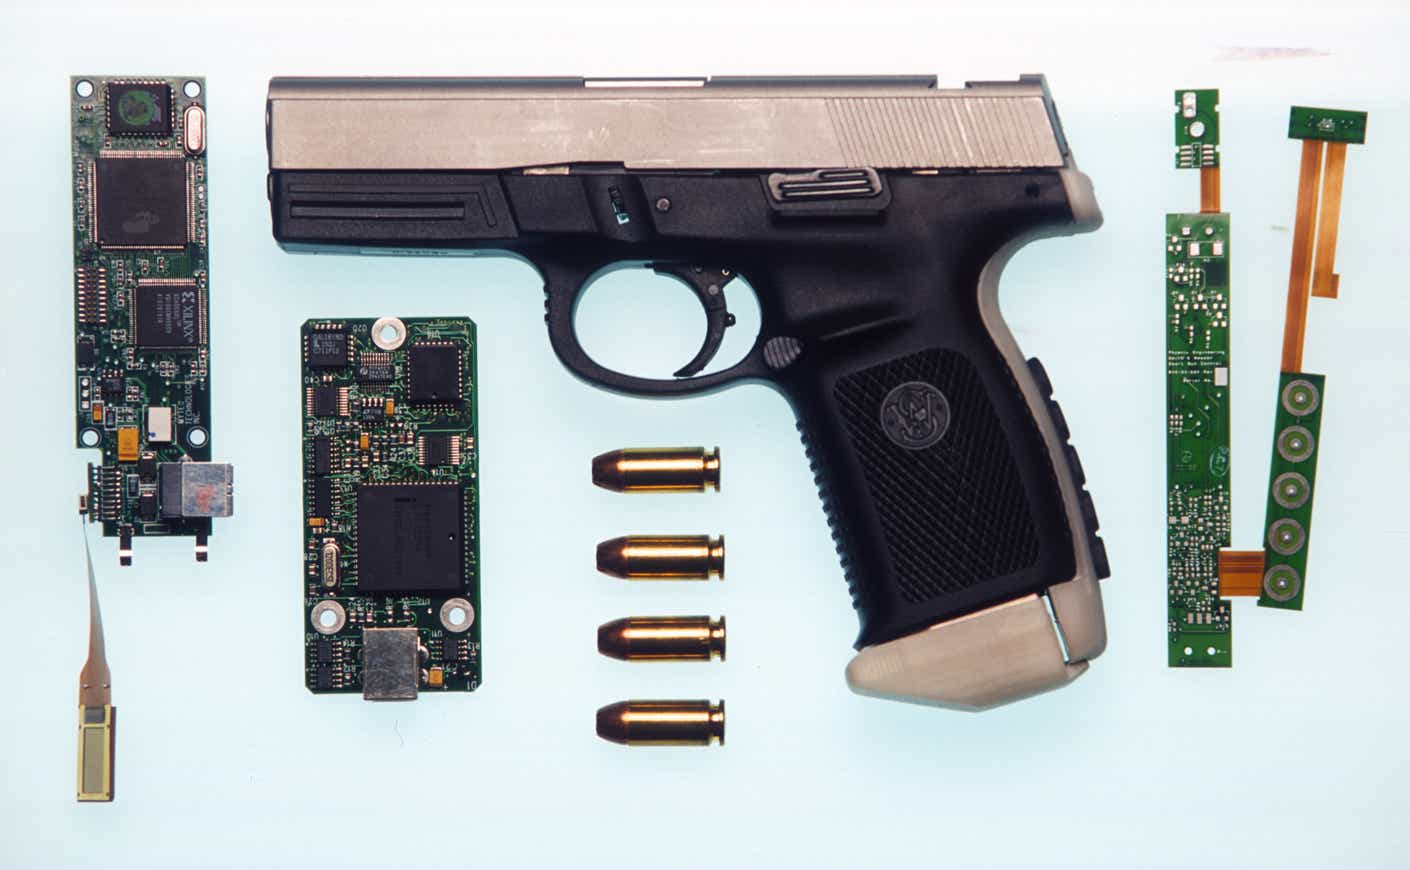 Smith & Wesson's smart gun prototype